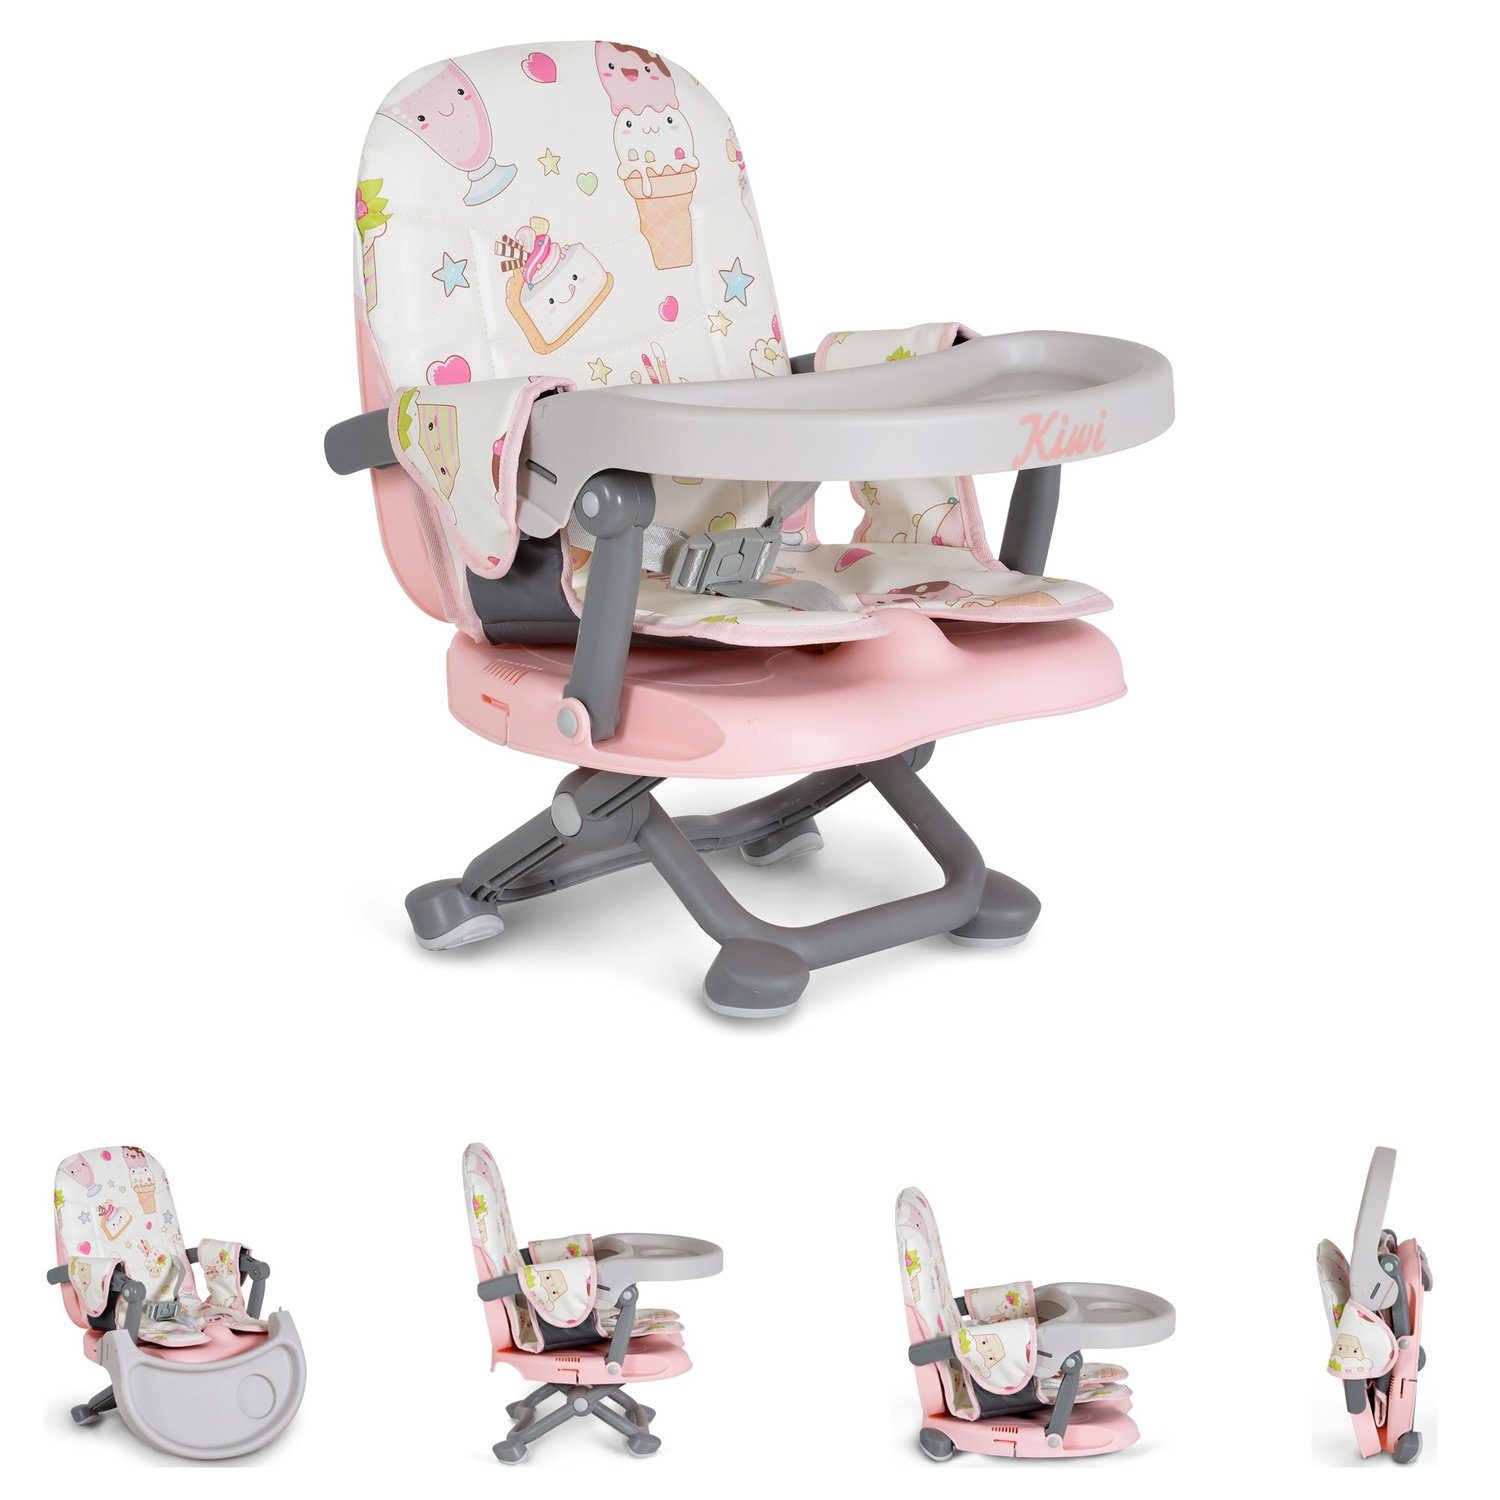 Moni Stuhl Kinderstuhl Kiwi, Kinder Stuhl-, Sitzerhöhung, Boostersitz, Tisch, klappbar rosa Kuchen